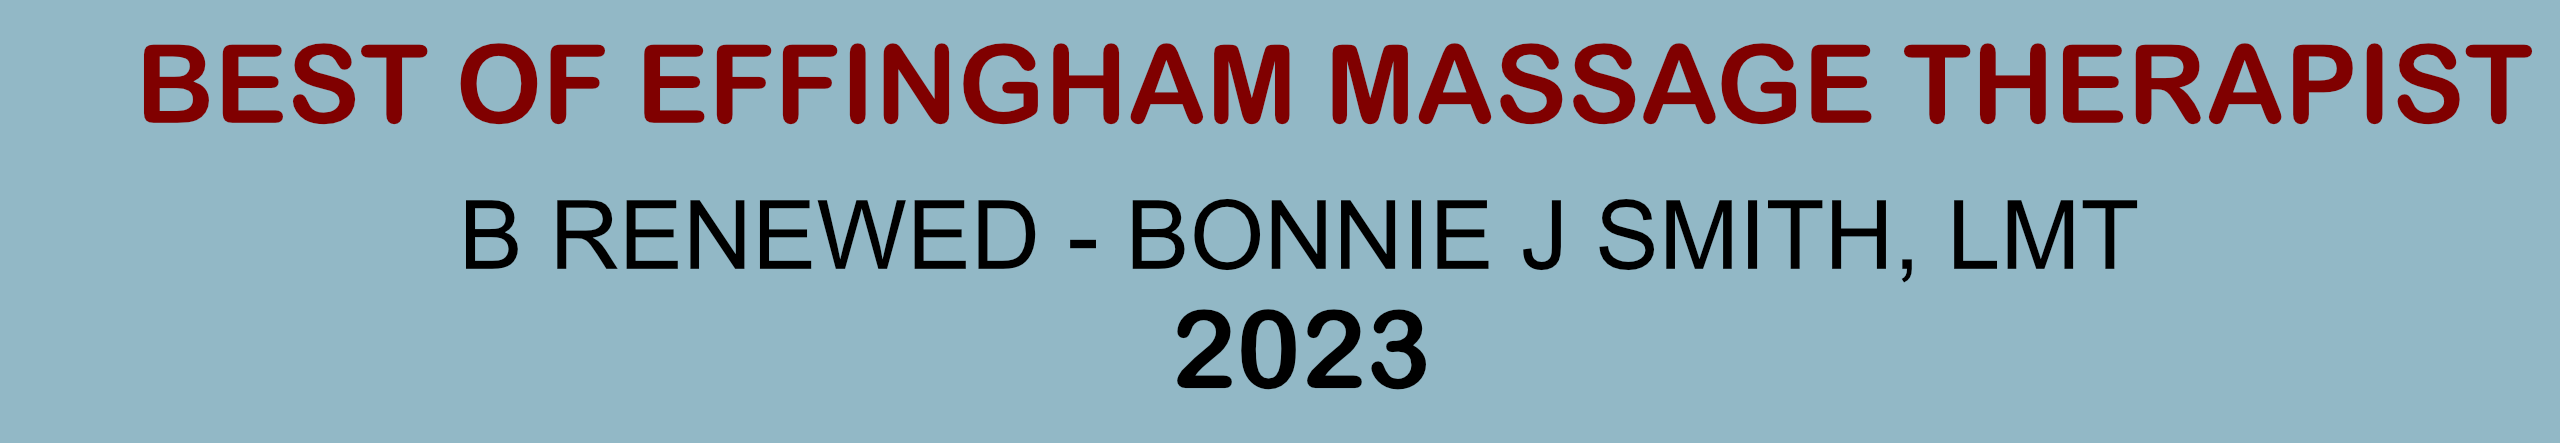 B Renewed by Bonnie J Smith, LMT Best of Effingham Massage Therapist 2023